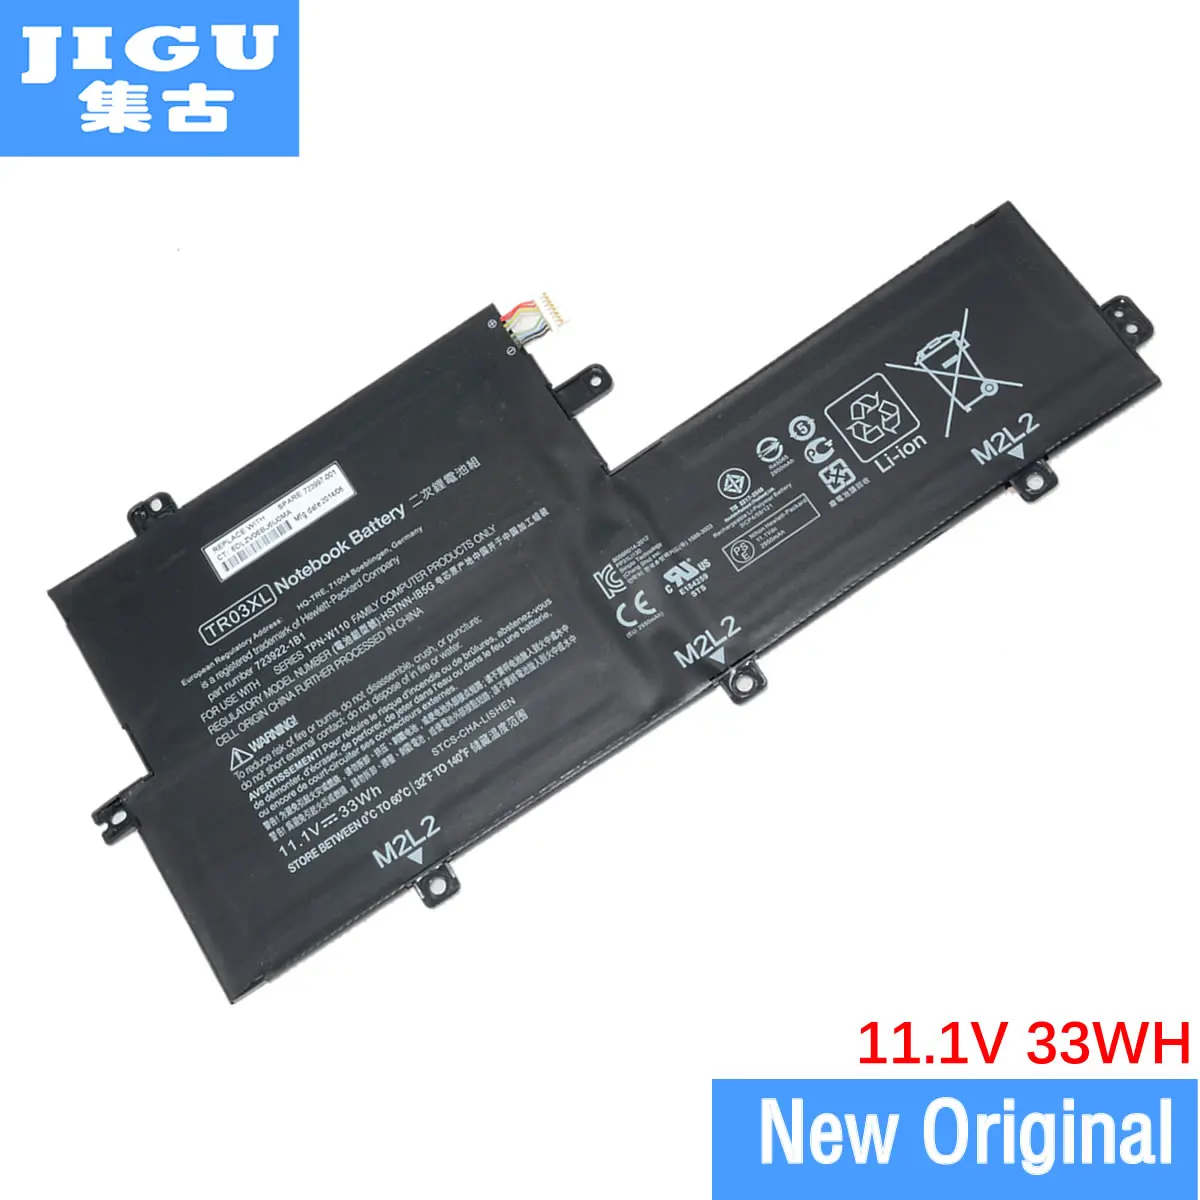 

JIGU 11.1V 33WH New Genuine Battery TR03XL For HP Split X2 13 Series HSTNN-DB5G HSTNN-IB5G TPN-W110 723922-2B1 723922-171